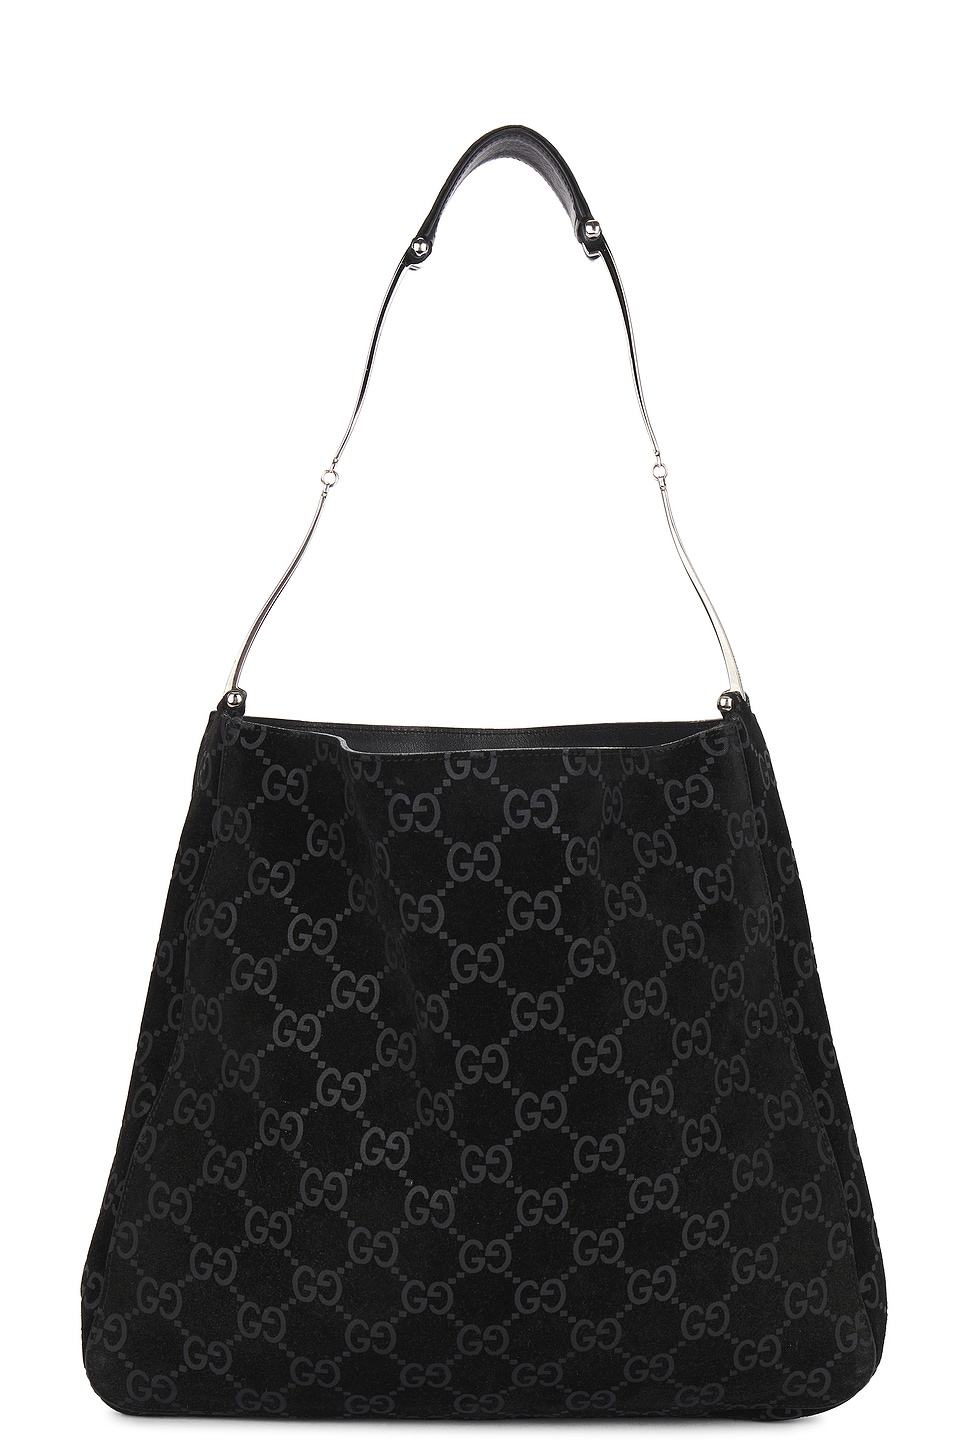 Gucci Monogram Suede Hobo Shoulder Bag In Black